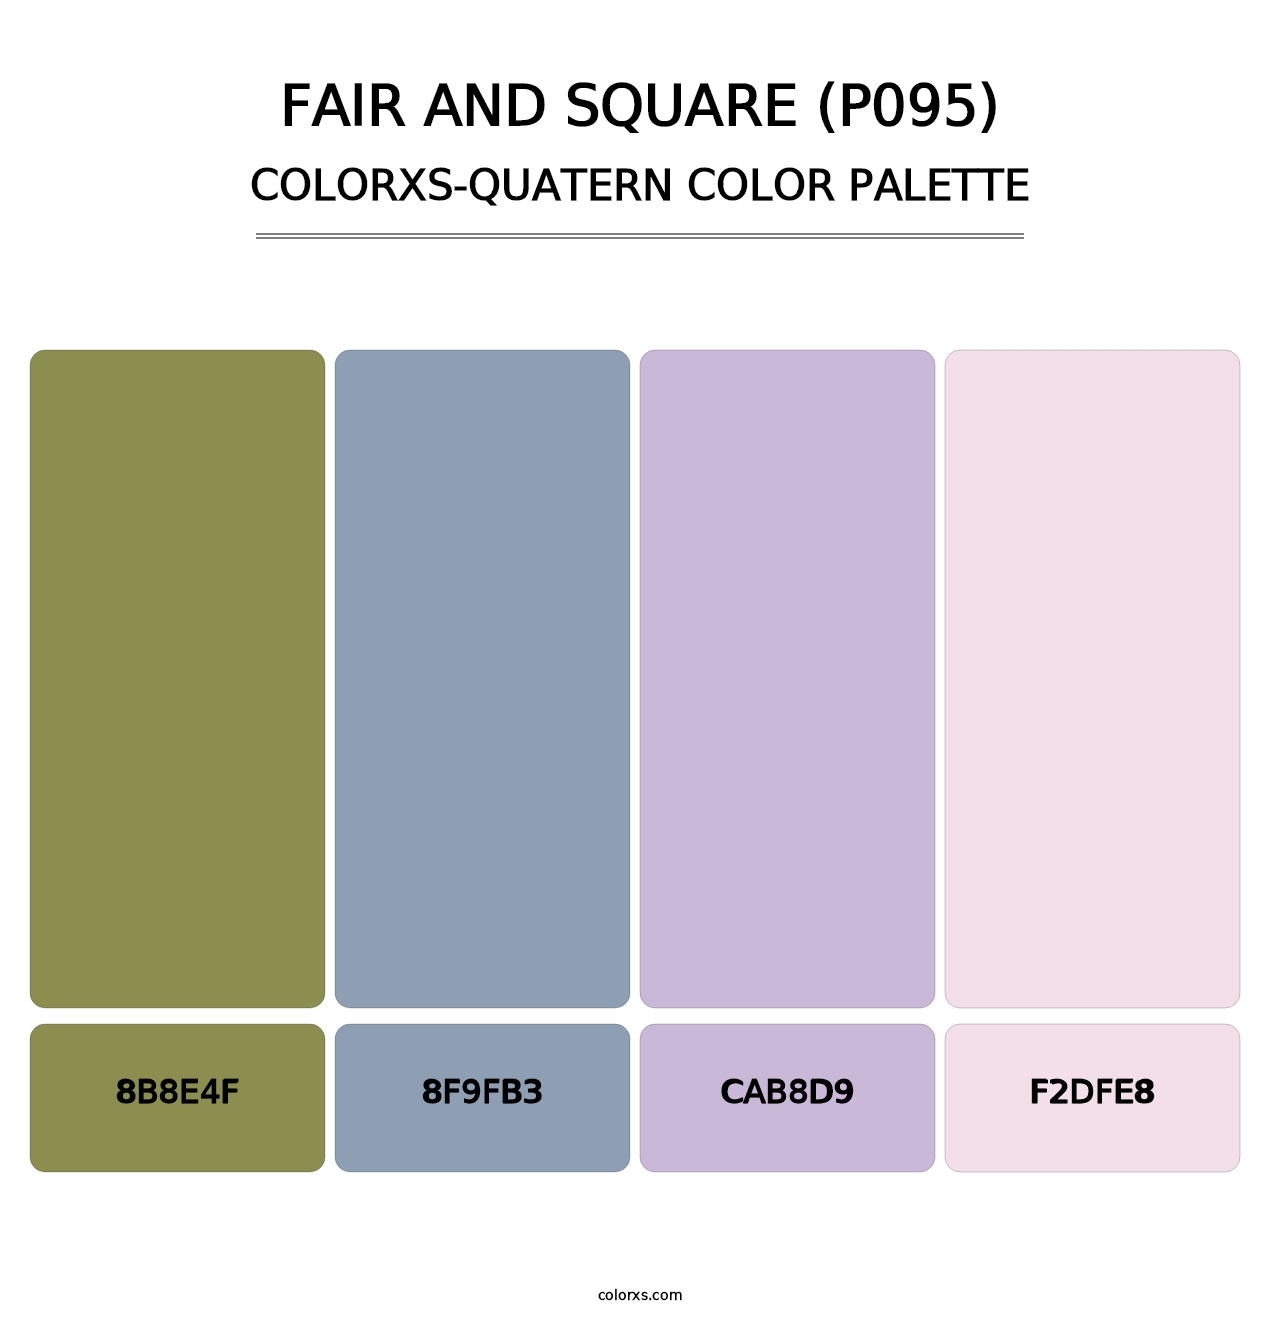 Fair and Square (P095) - Colorxs Quatern Palette